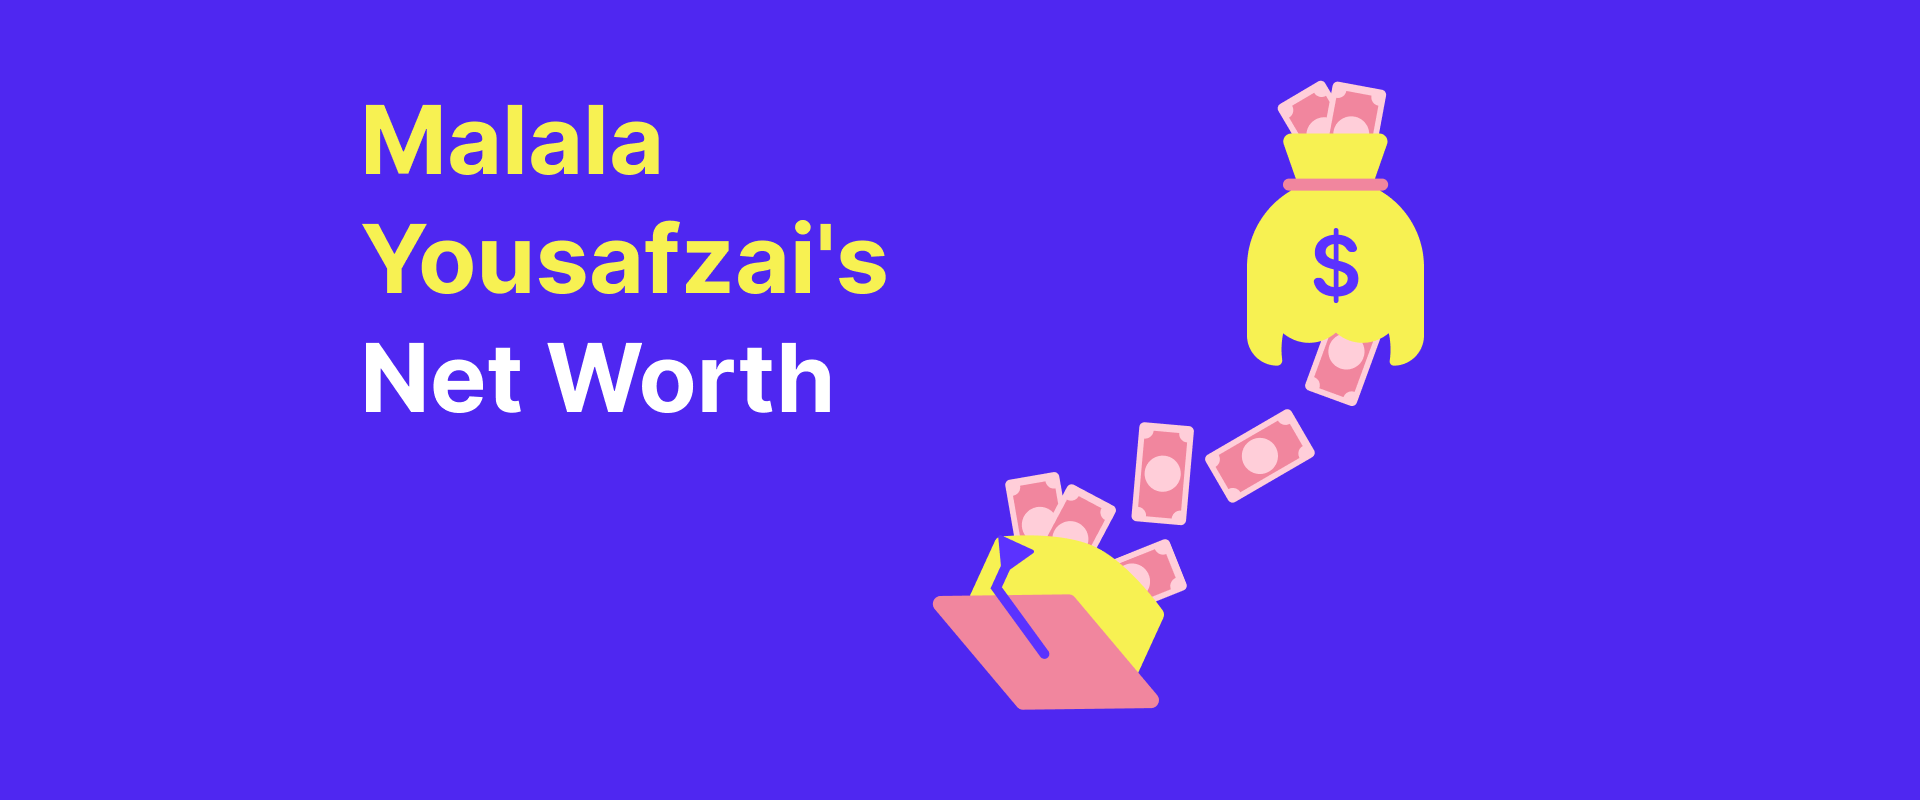 Malala Yousafzai's net worth